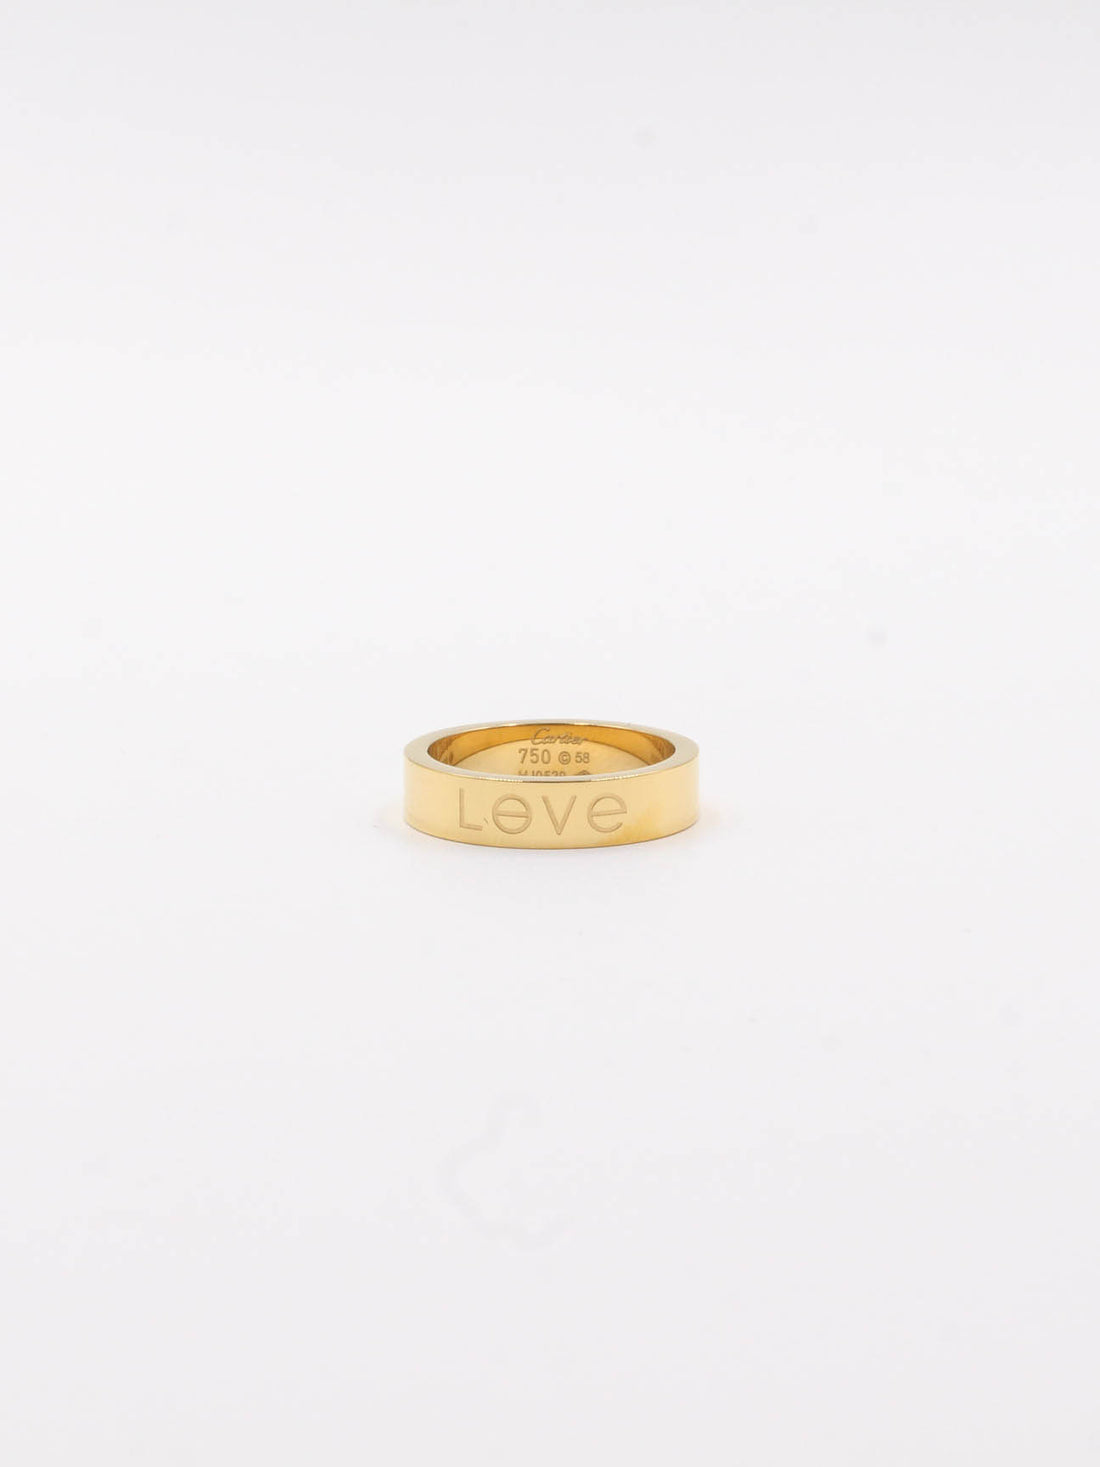 Cartier Love Ring - خاتم كارتير لوف خواتم Jewel ذهبي 6 